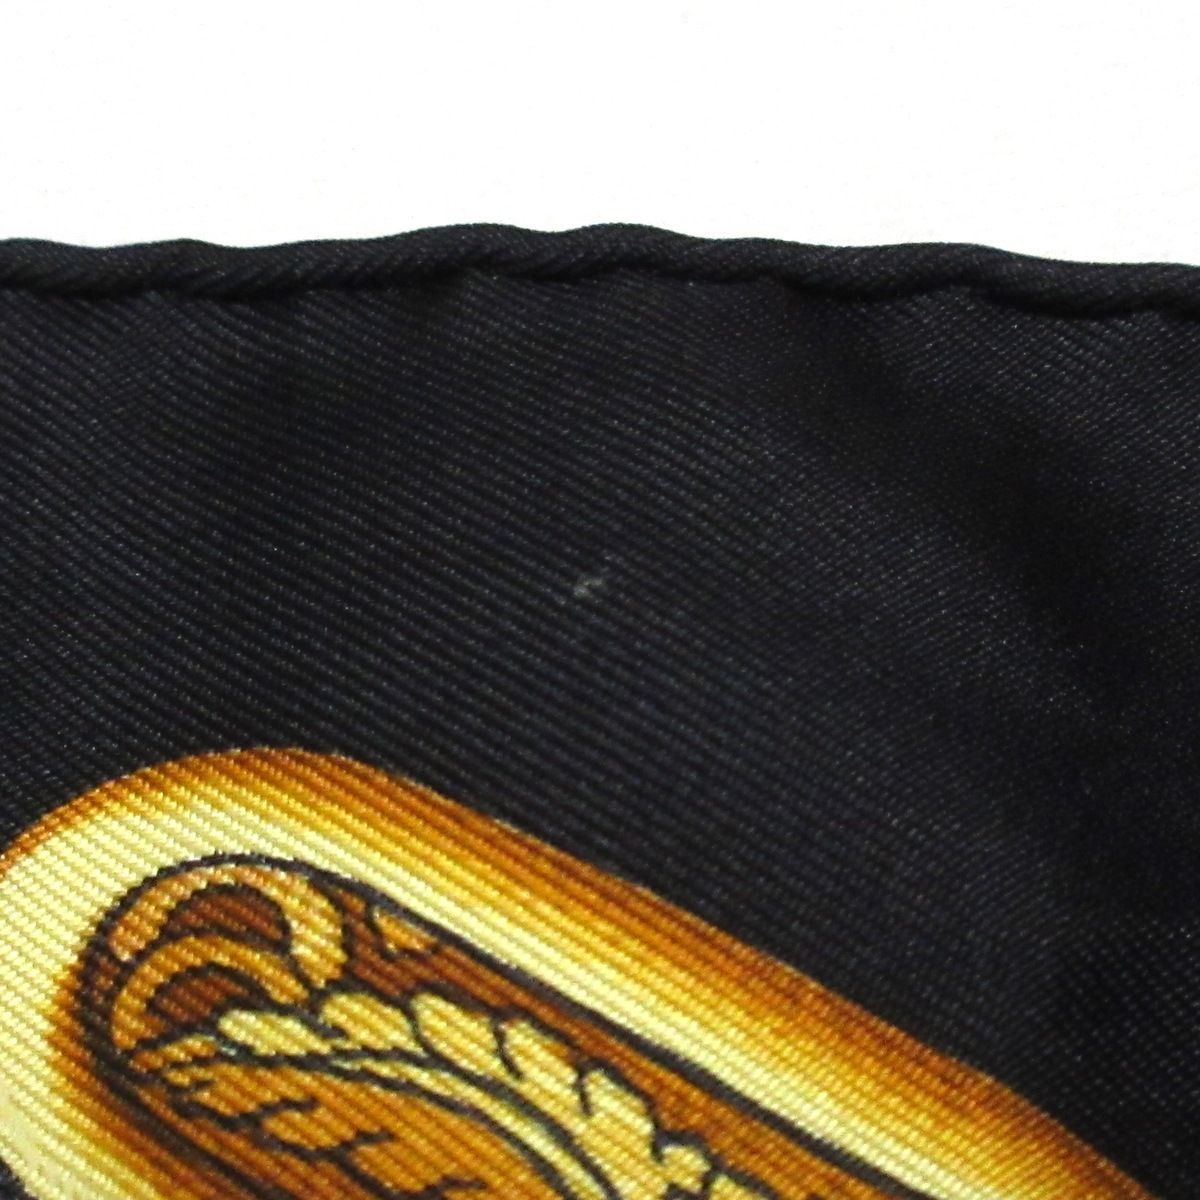 HERMES(エルメス) スカーフ美品 カレ90 黒×ブラウン×マルチ EUROPE